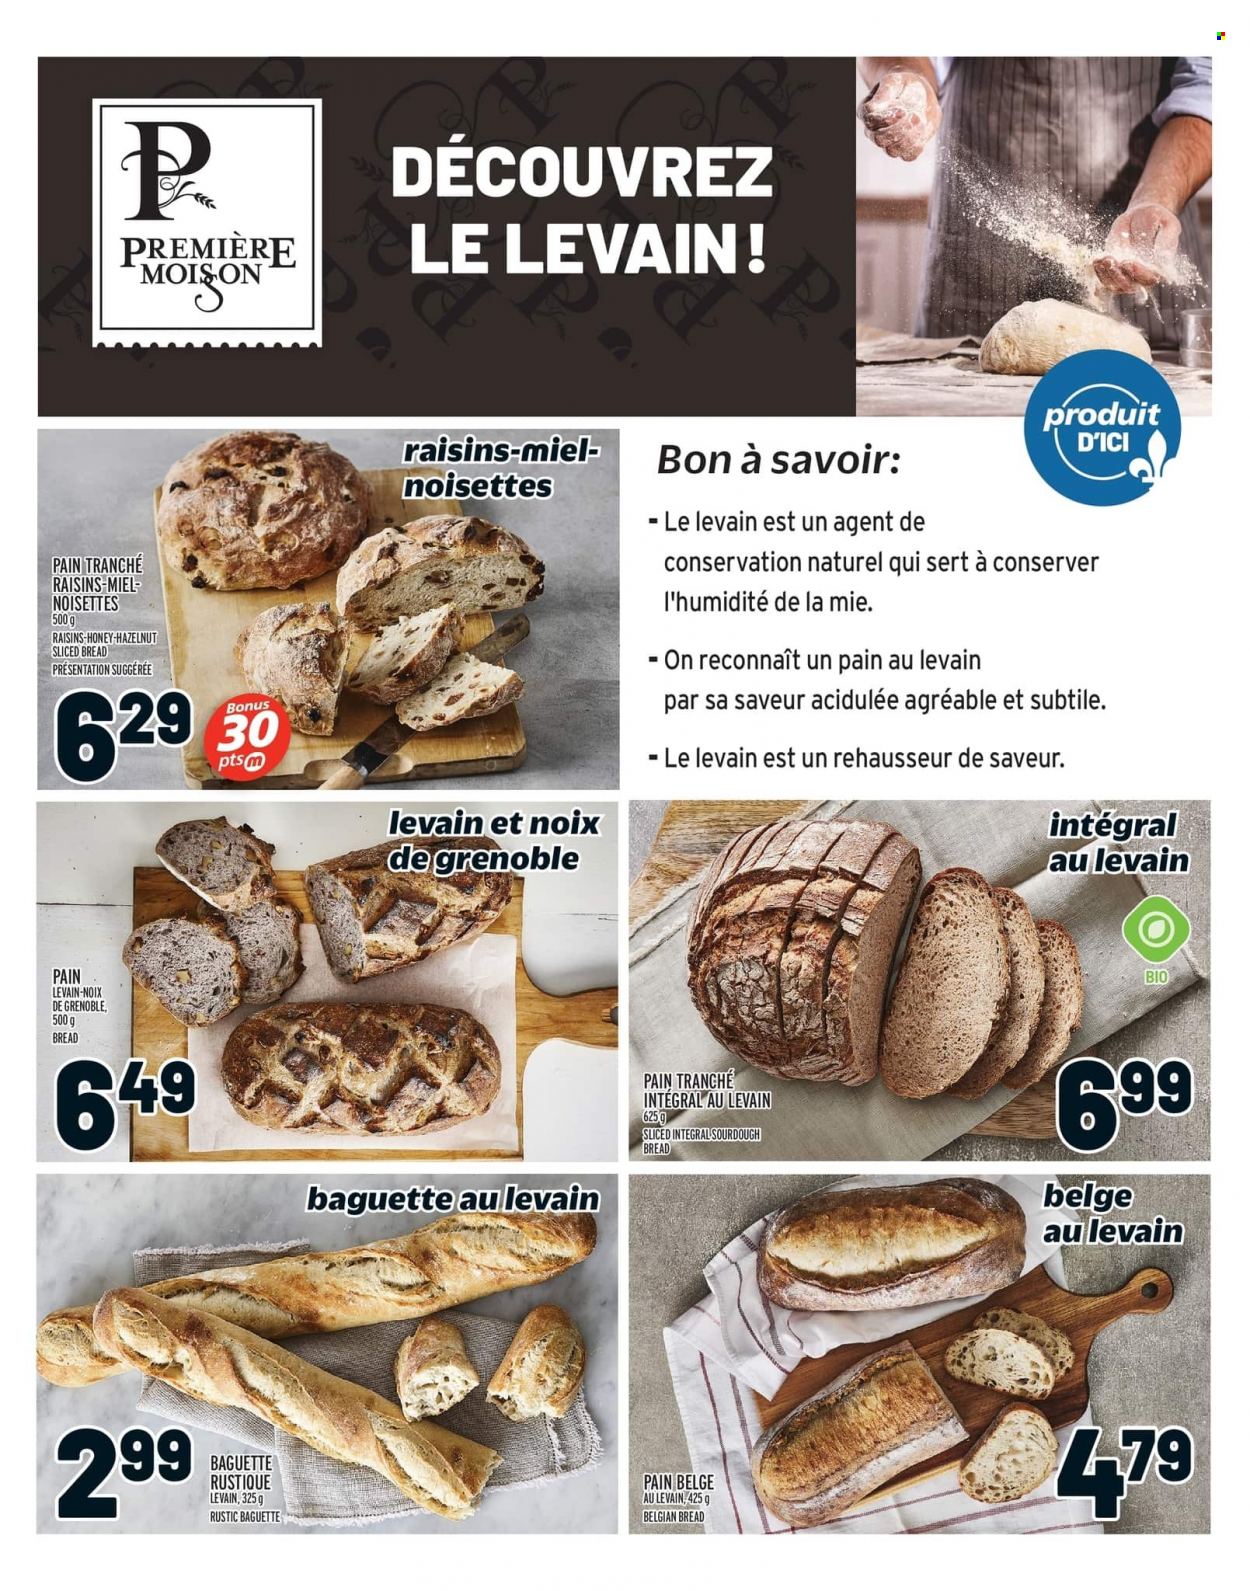 thumbnail - Metro Flyer - February 02, 2023 - February 08, 2023 - Sales products - bread, sourdough bread, honey, dried fruit, PREMIERE, baguette, raisins. Page 18.